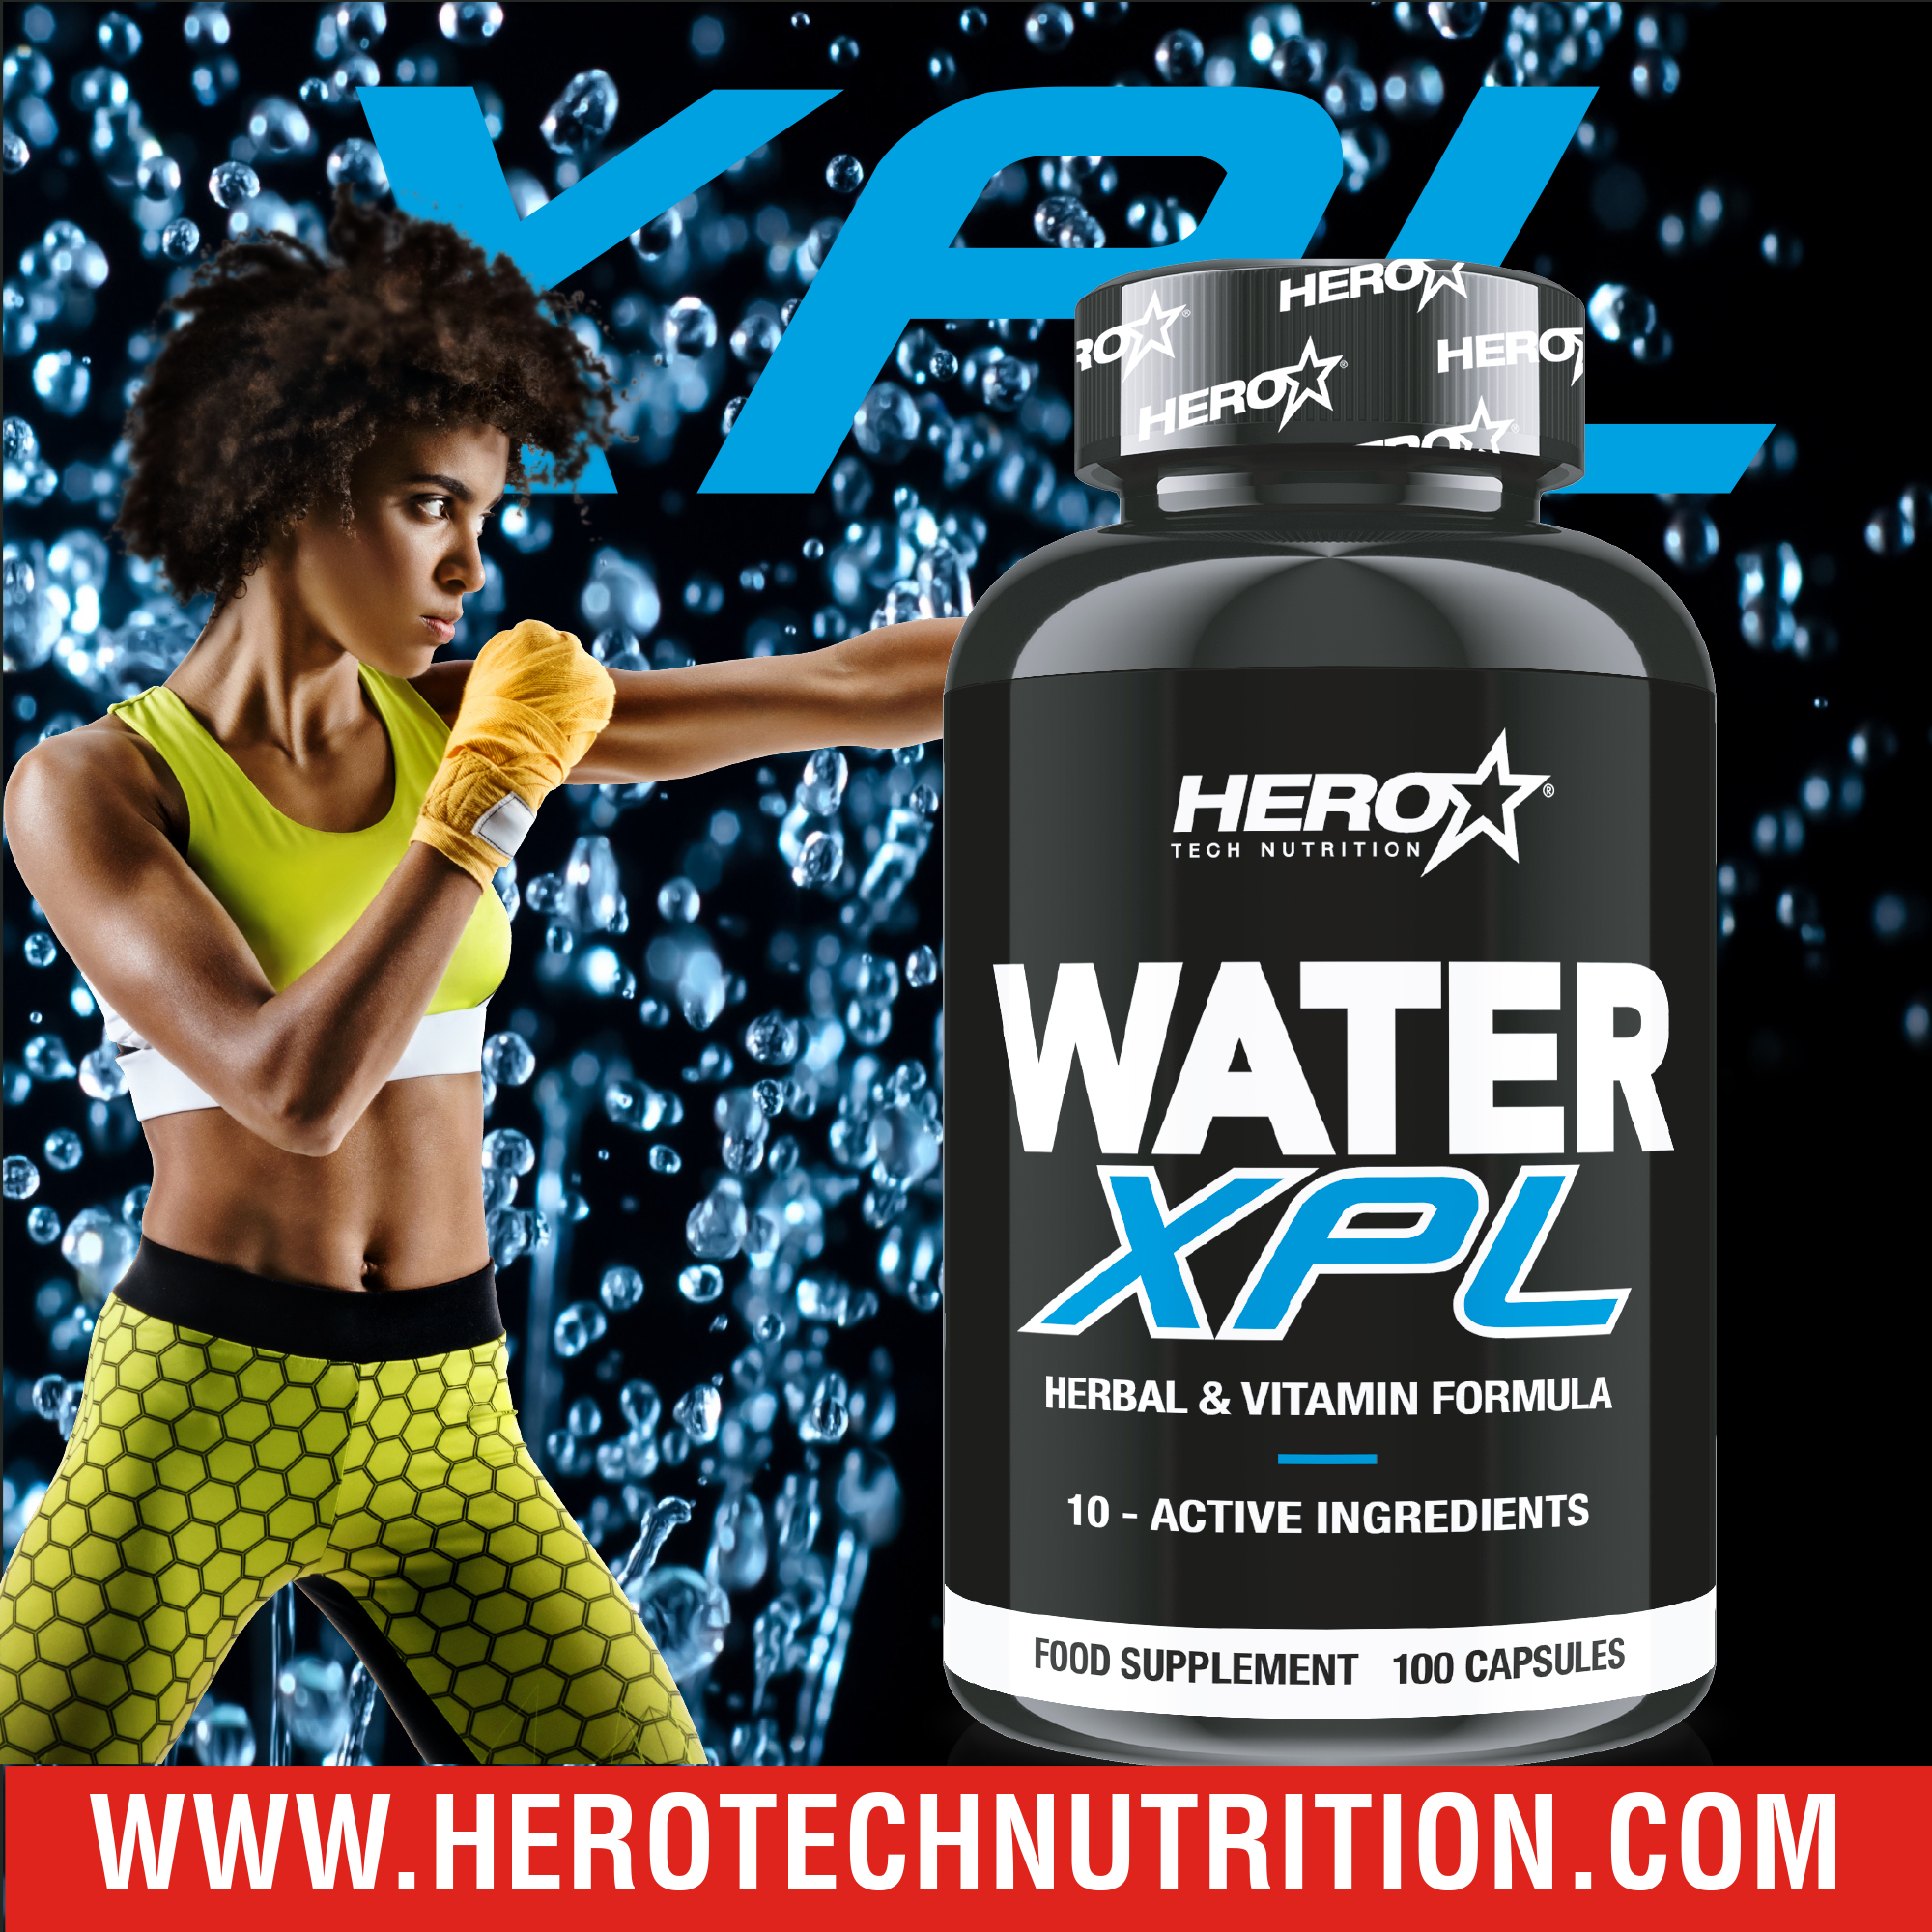 WATER XPL HERO TECH NUTRITION herotechnutrition